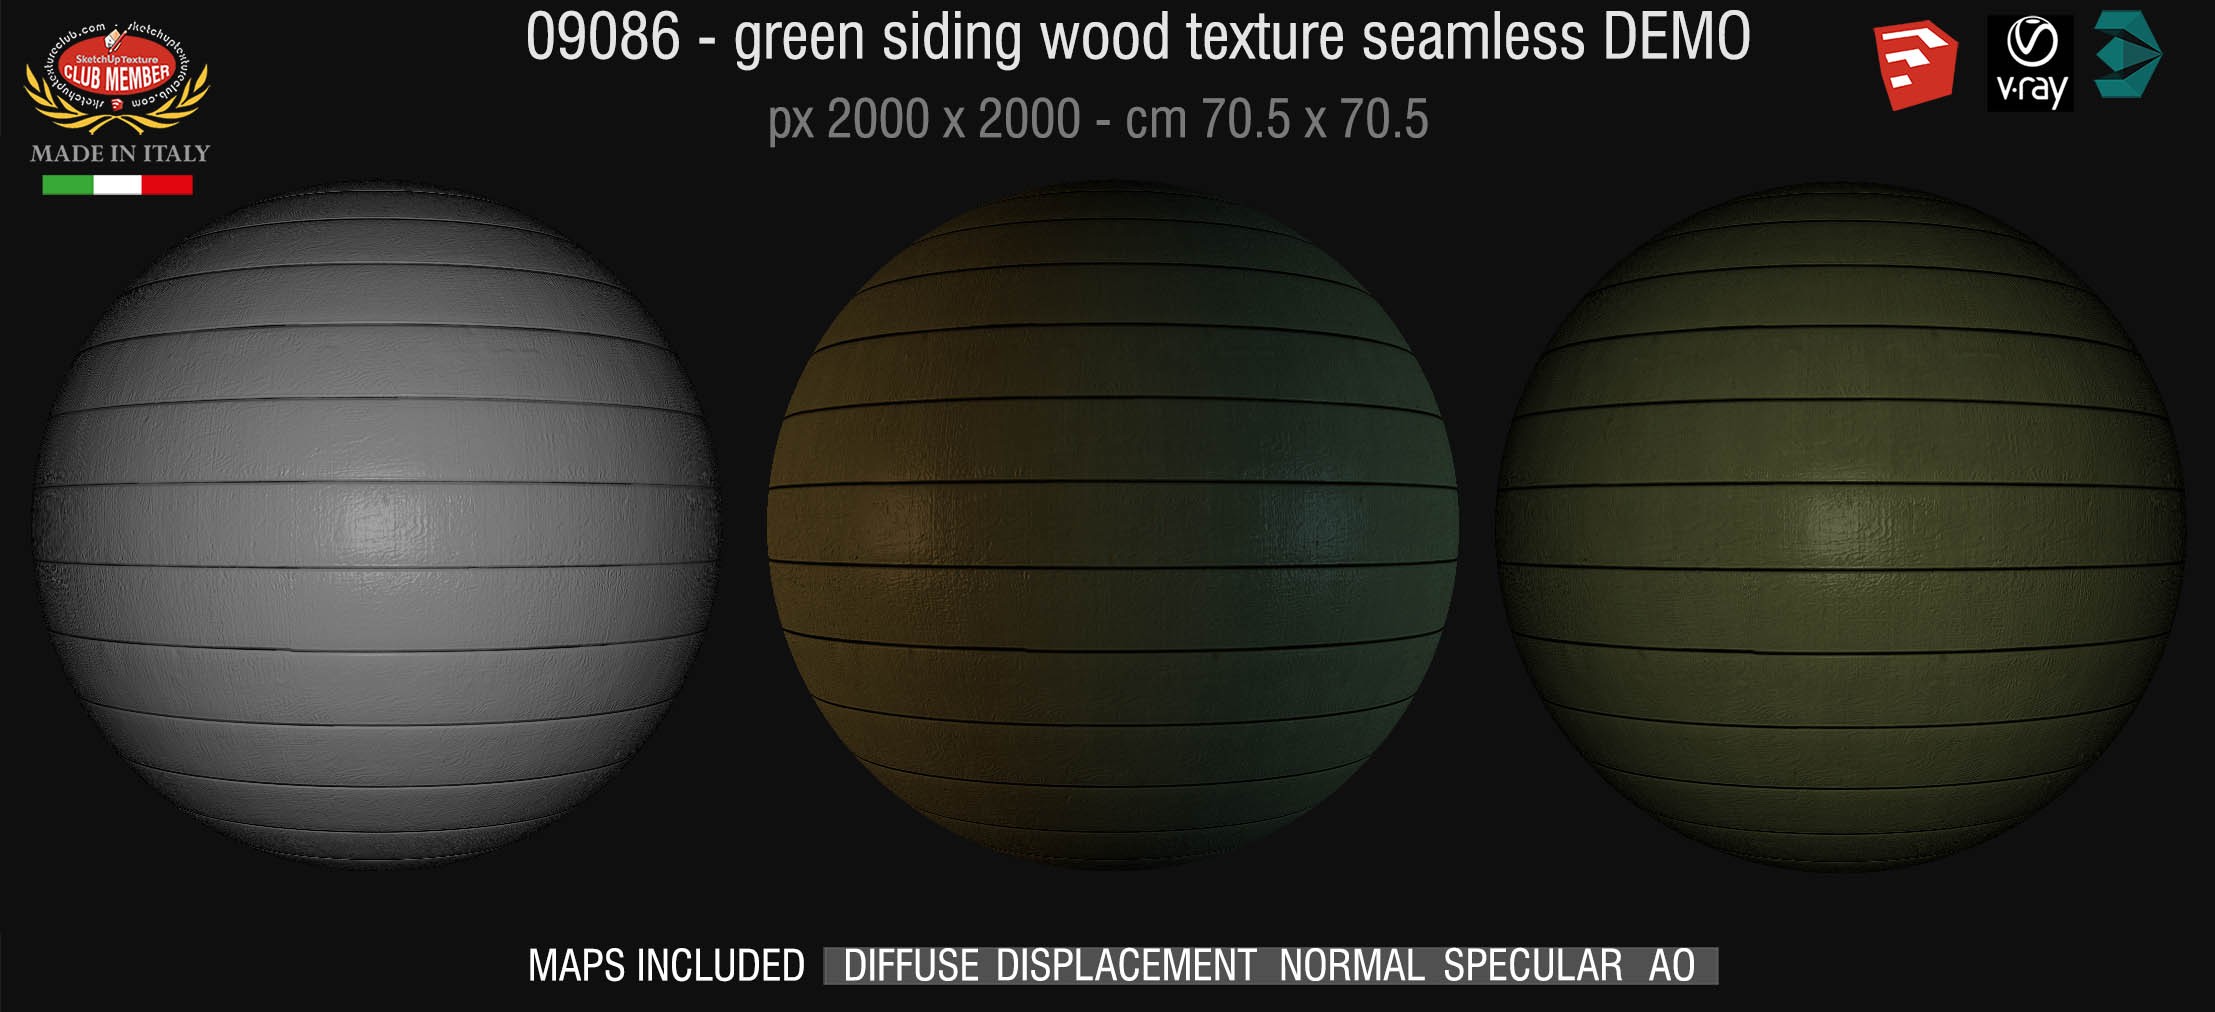 09086 HR Green siding wood texture + maps DEMO